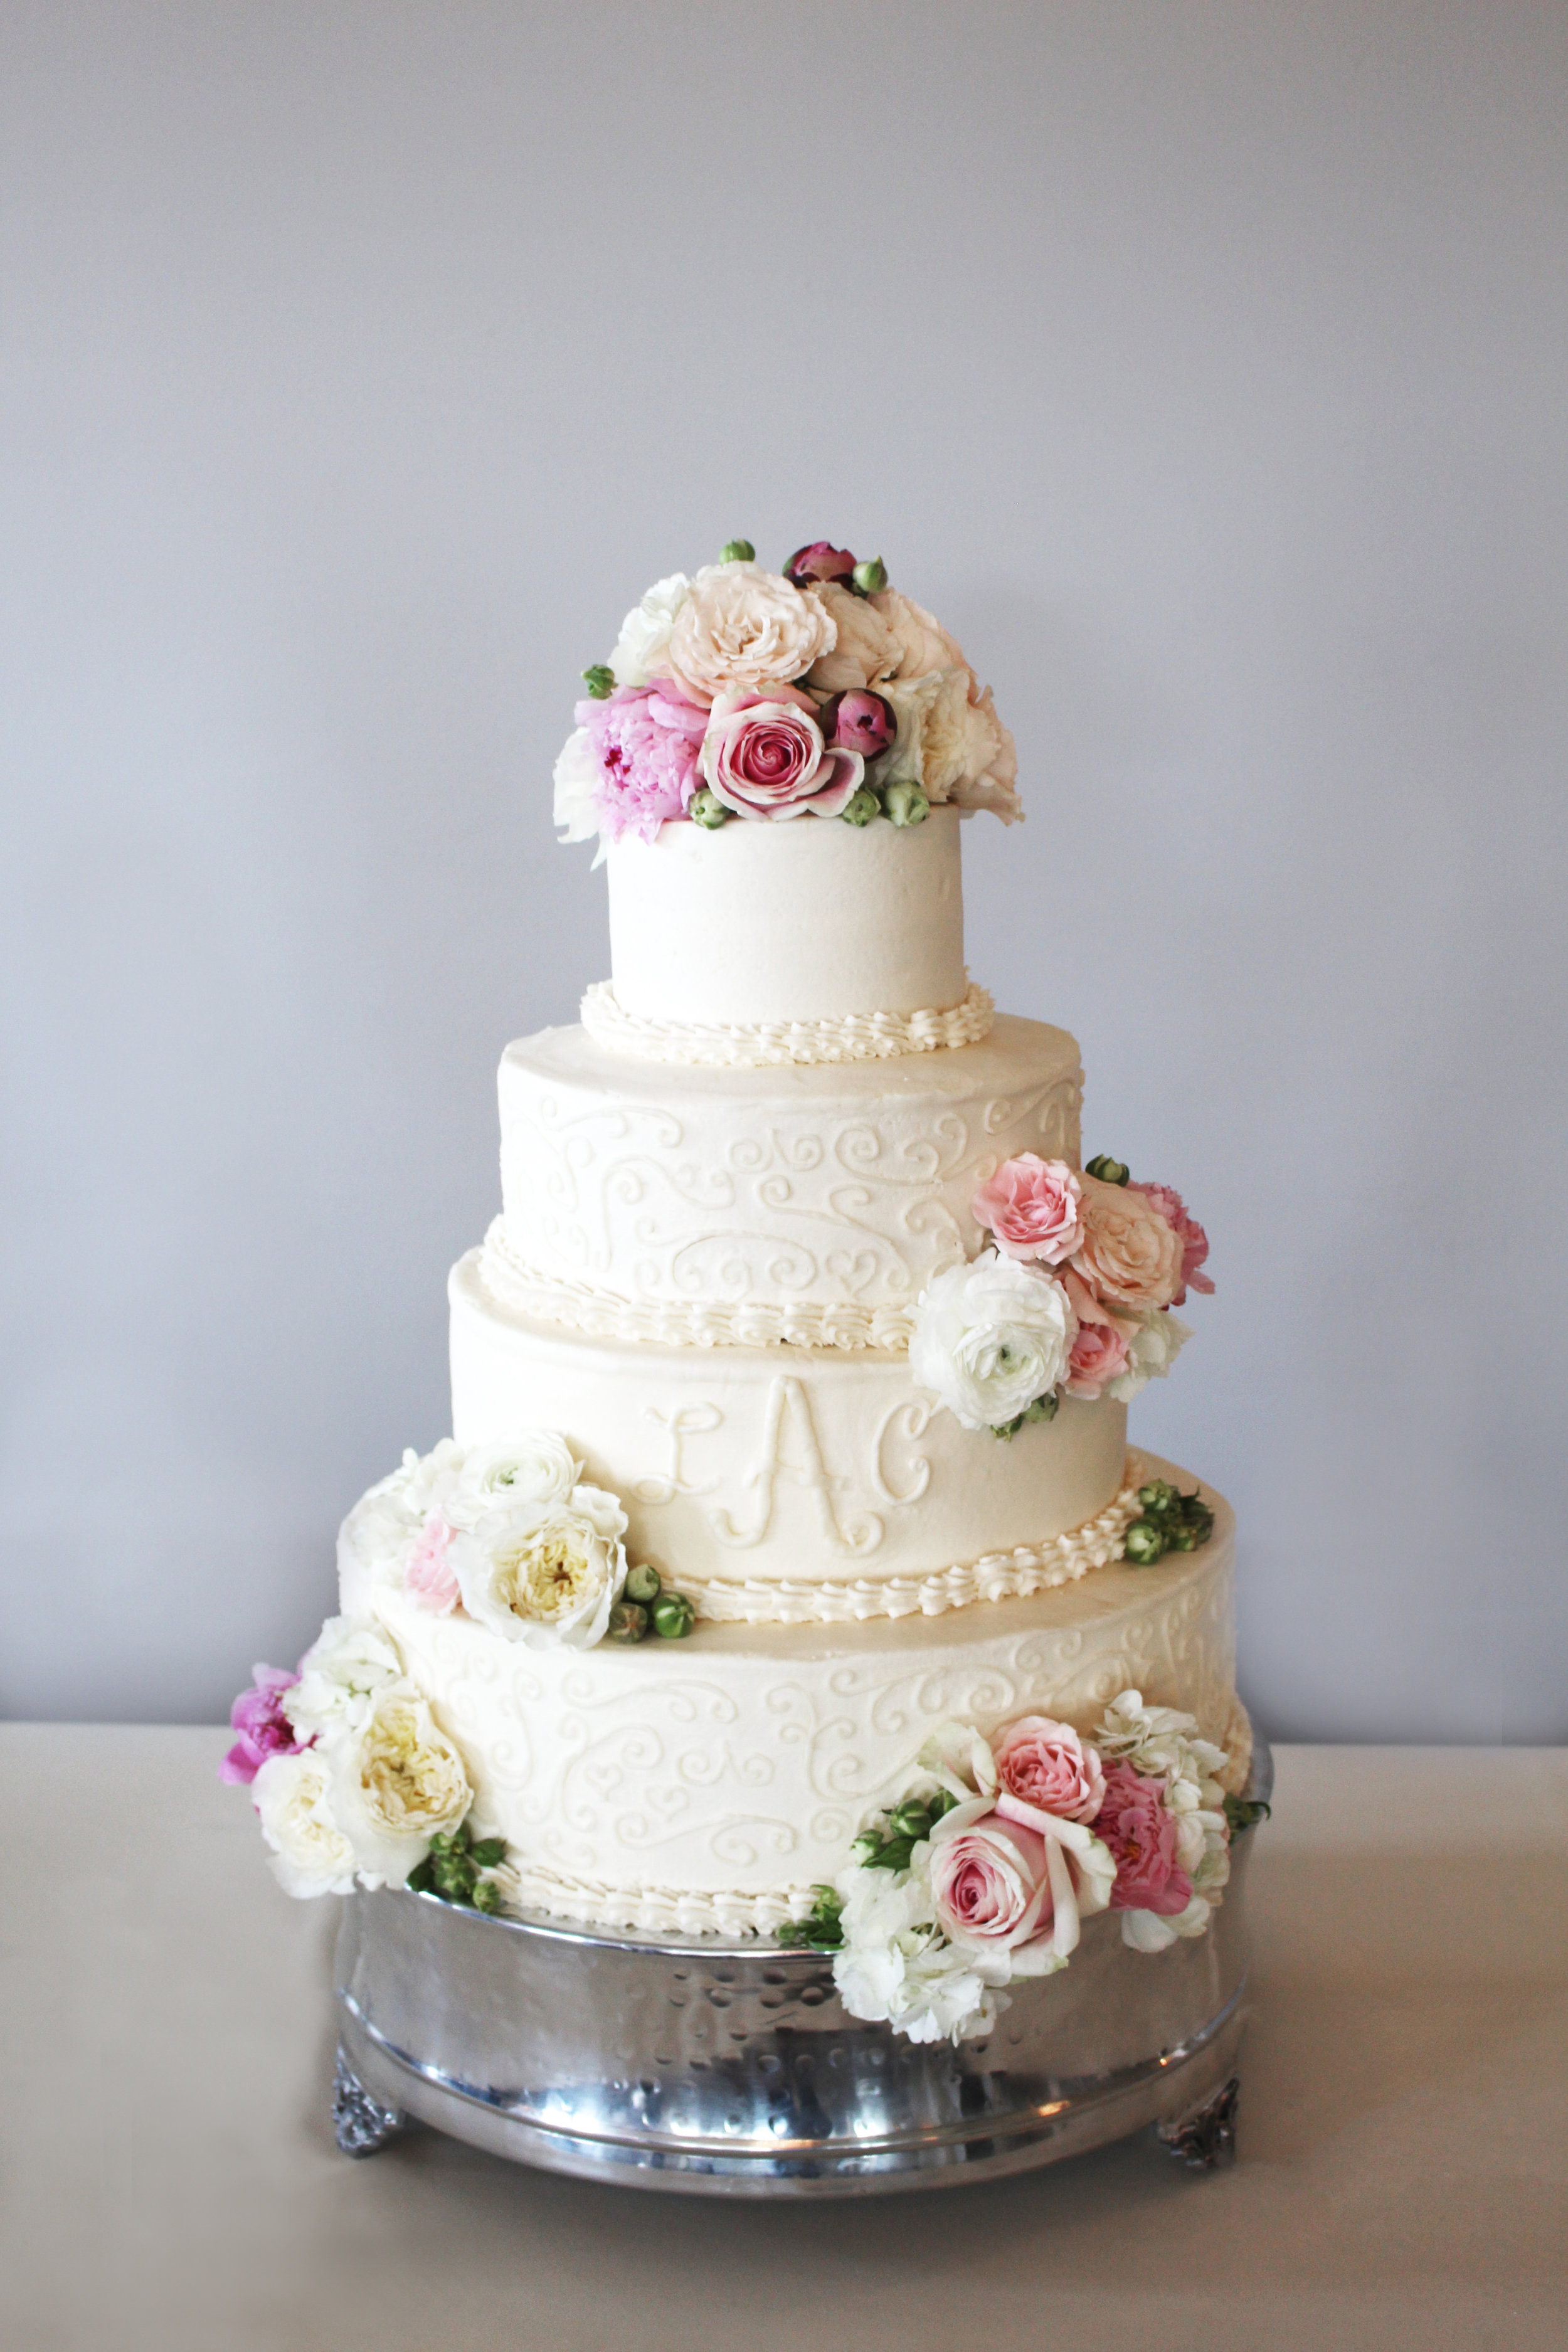 A Taste of Heaven Cupcakes - Wedding Cake - Buckley, WA - WeddingWire